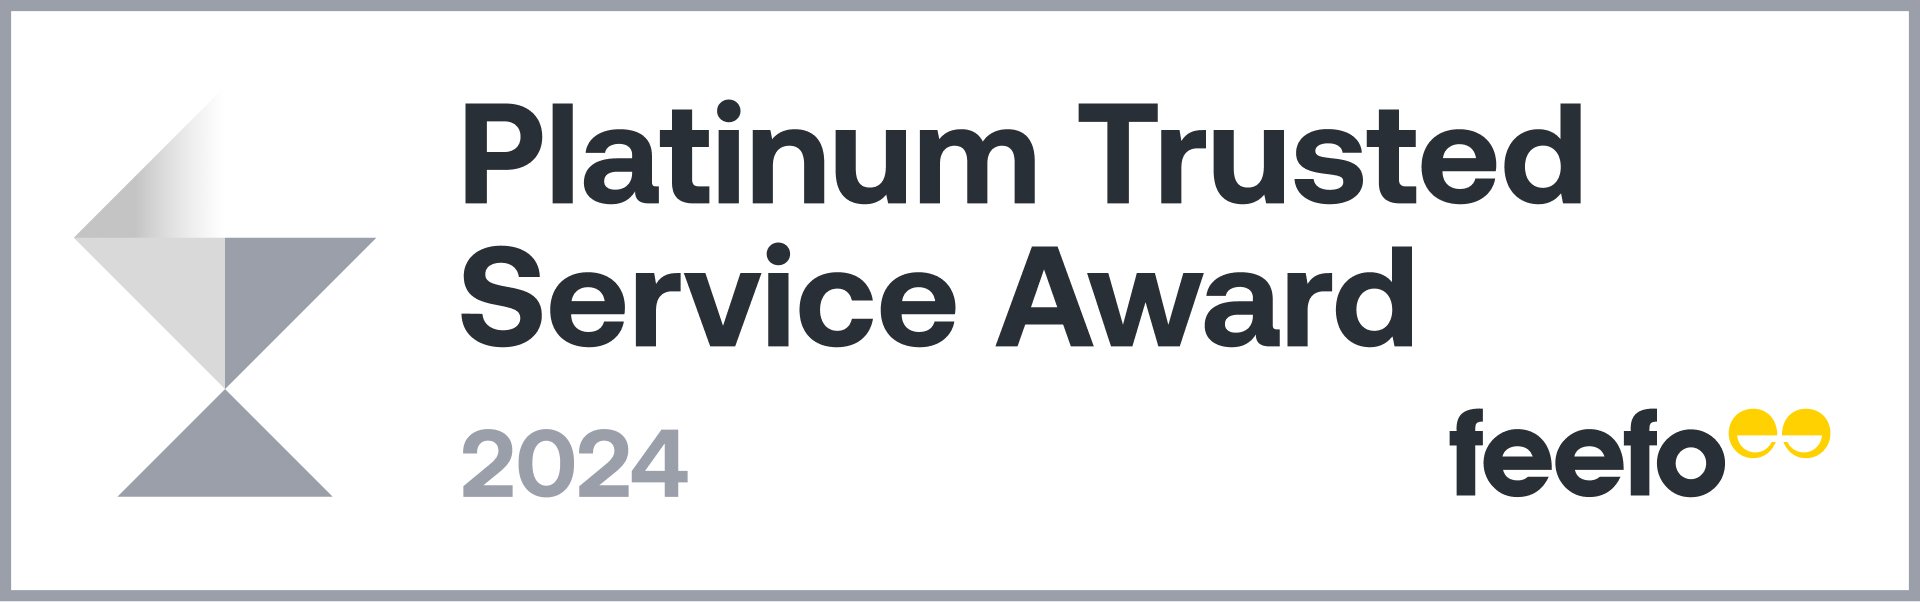 Platinum Trusted Service Award 2024 - Full colour - Landscape.jpg